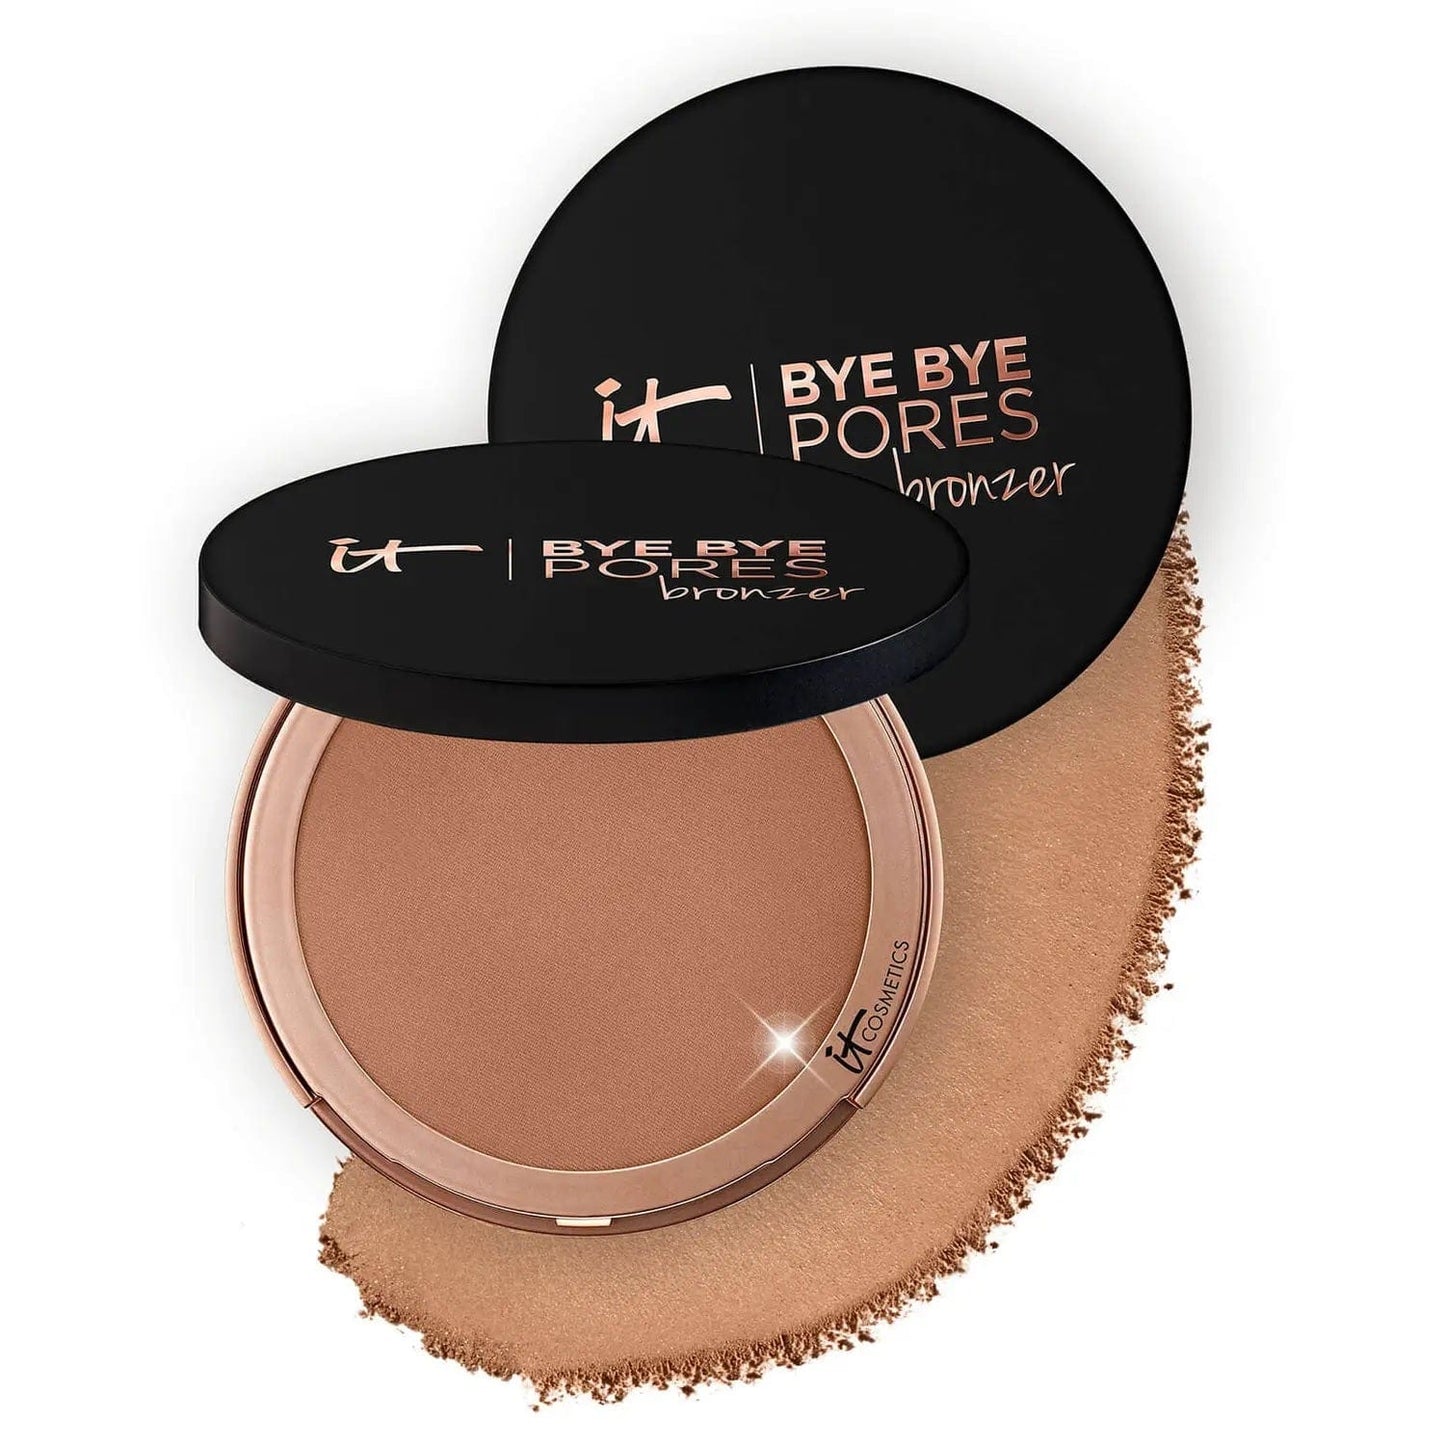 IT COSMETICS Beauty IT Cosmetics Bye Bye Pores Bronzer - Bronze Glow 10g